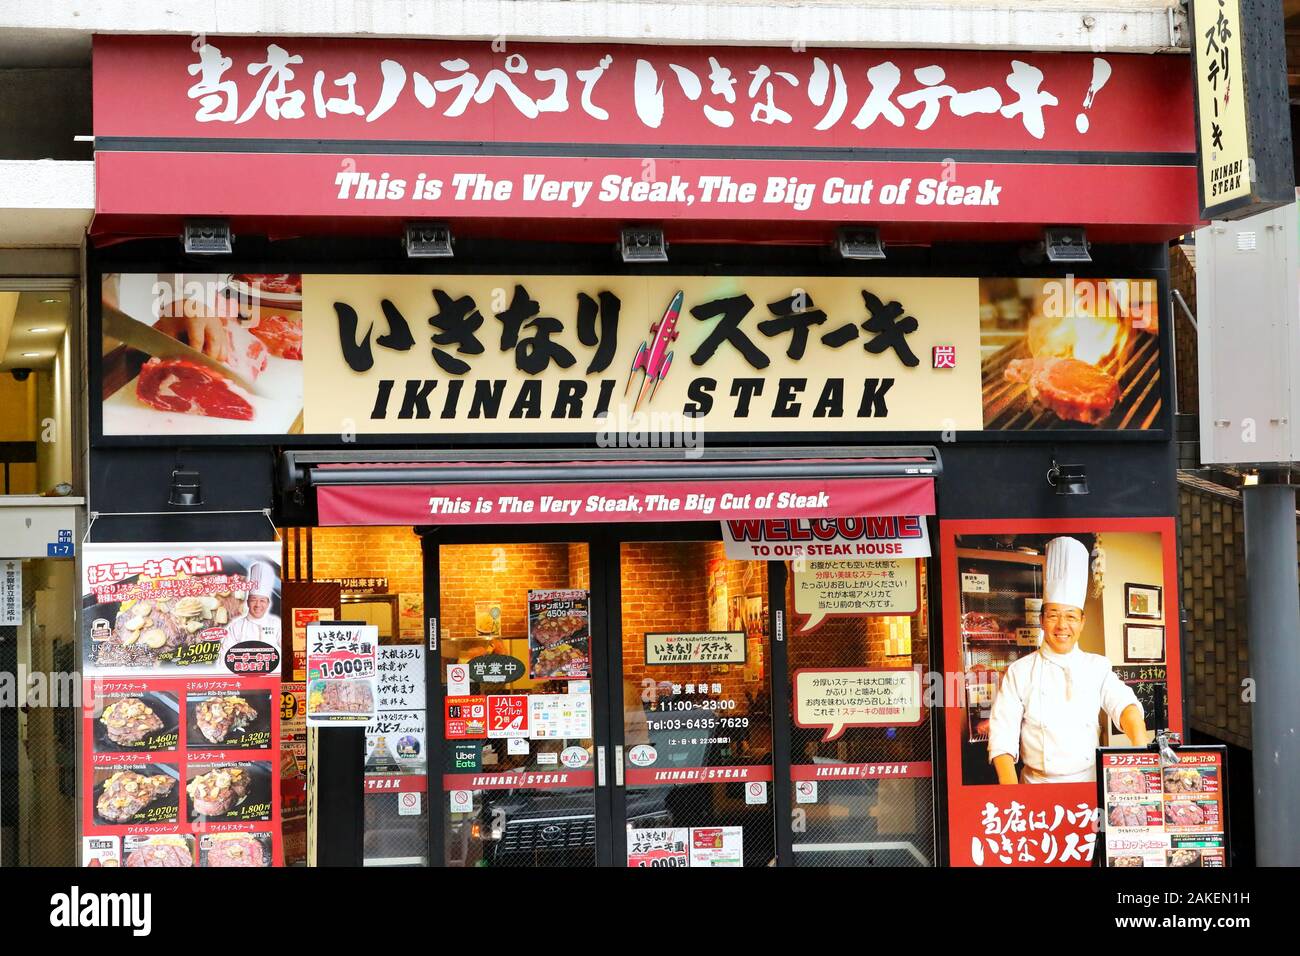 A General View Of Ikinari Steak Restaurant In Tokyo Japan On January 7 2020 Credit Naoki Nishimura Aflo Alamy Live News Stock Photo Alamy